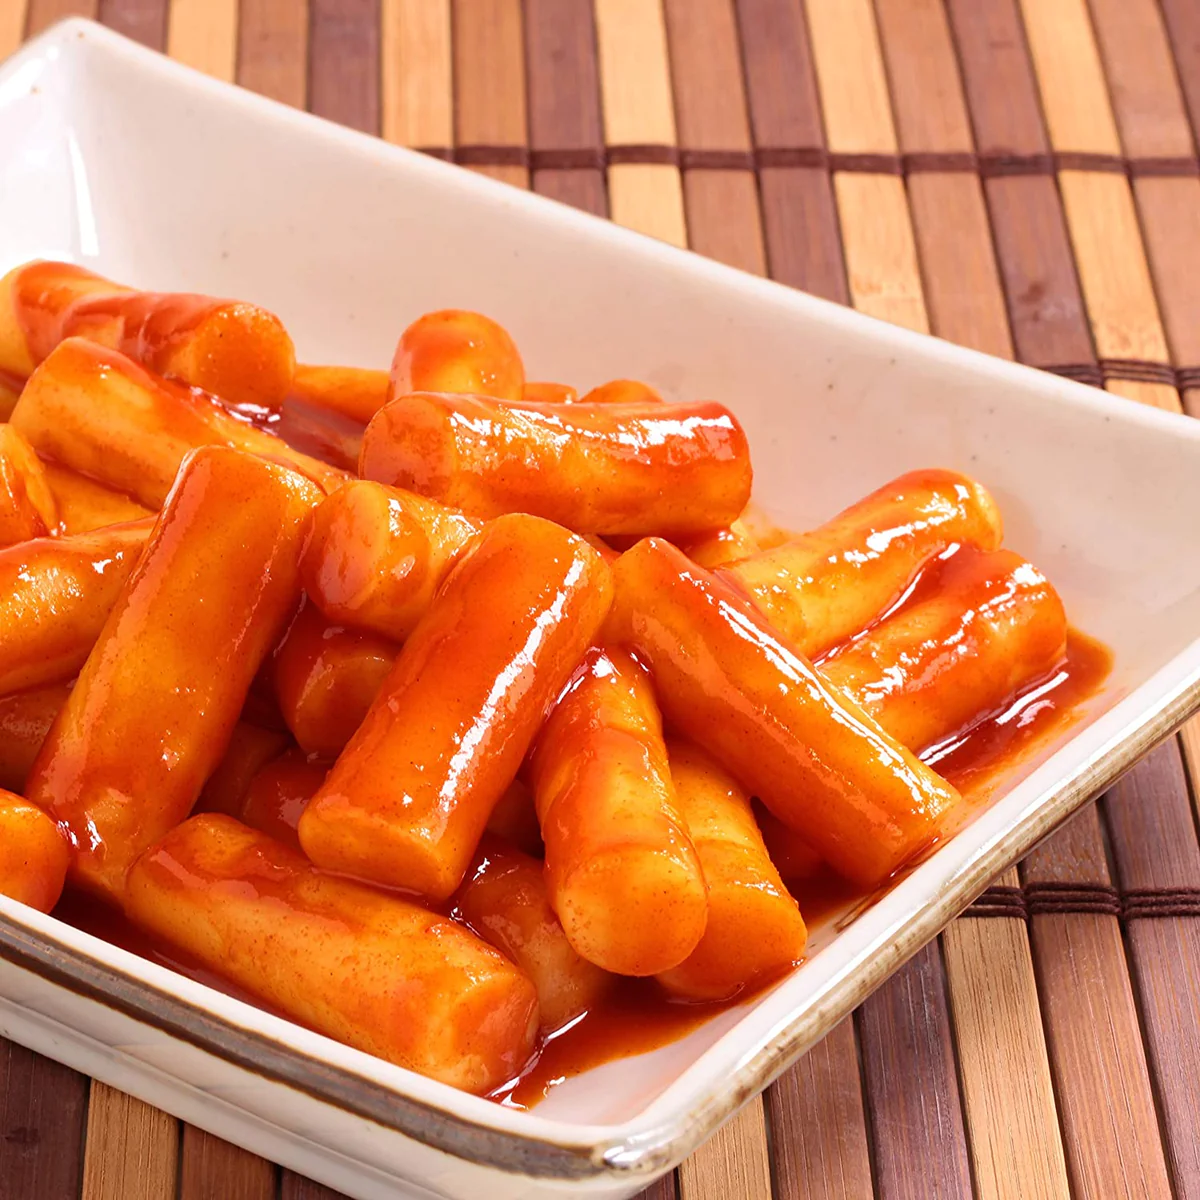 Gnocchi di riso instant Tteokbokki Gusto con salsa Jjajang - Youmi 138g